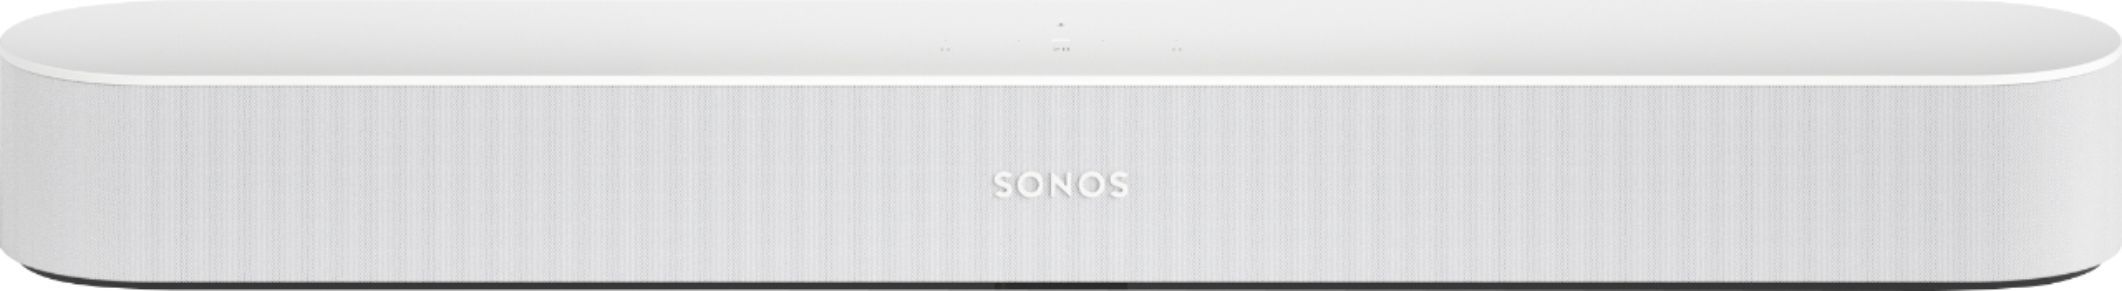 Sonos Beam Soundbar with Voice Control built-in White BEAM1US1 - Best Buy | Best Buy U.S.